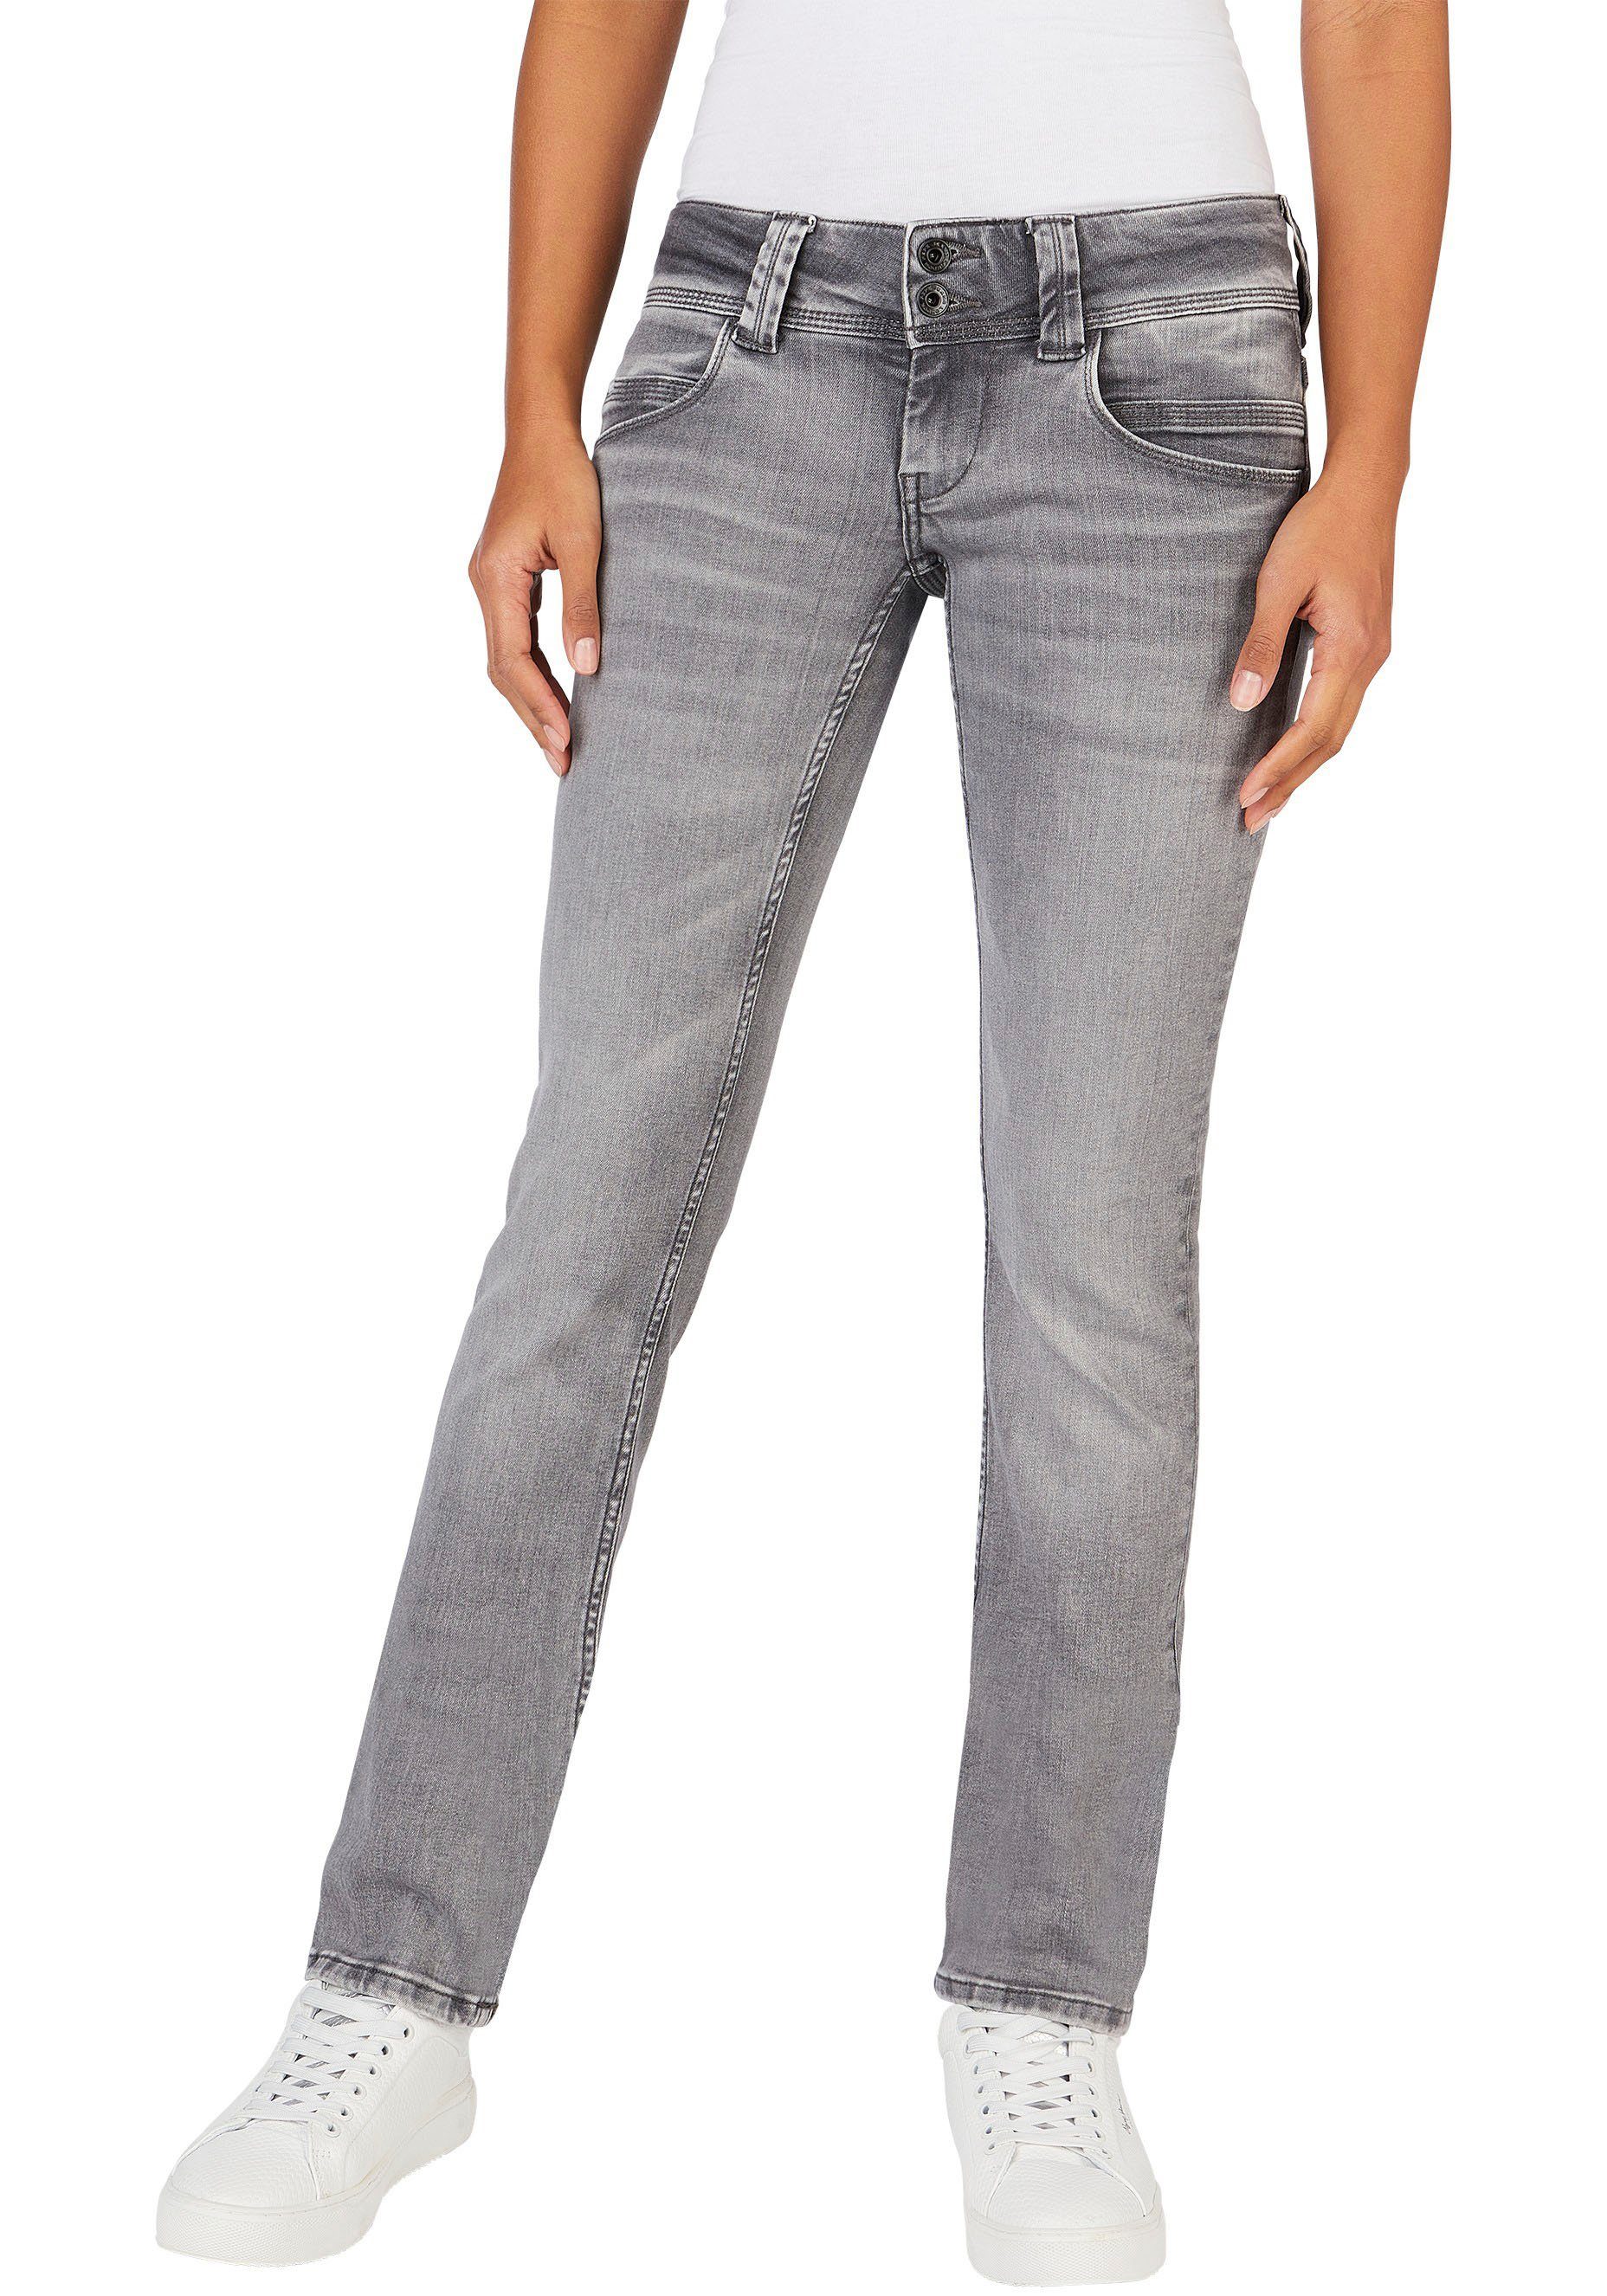 【Echt】 Jeans VENUS mit wiser Pepe Regular-fit-Jeans grey Badge